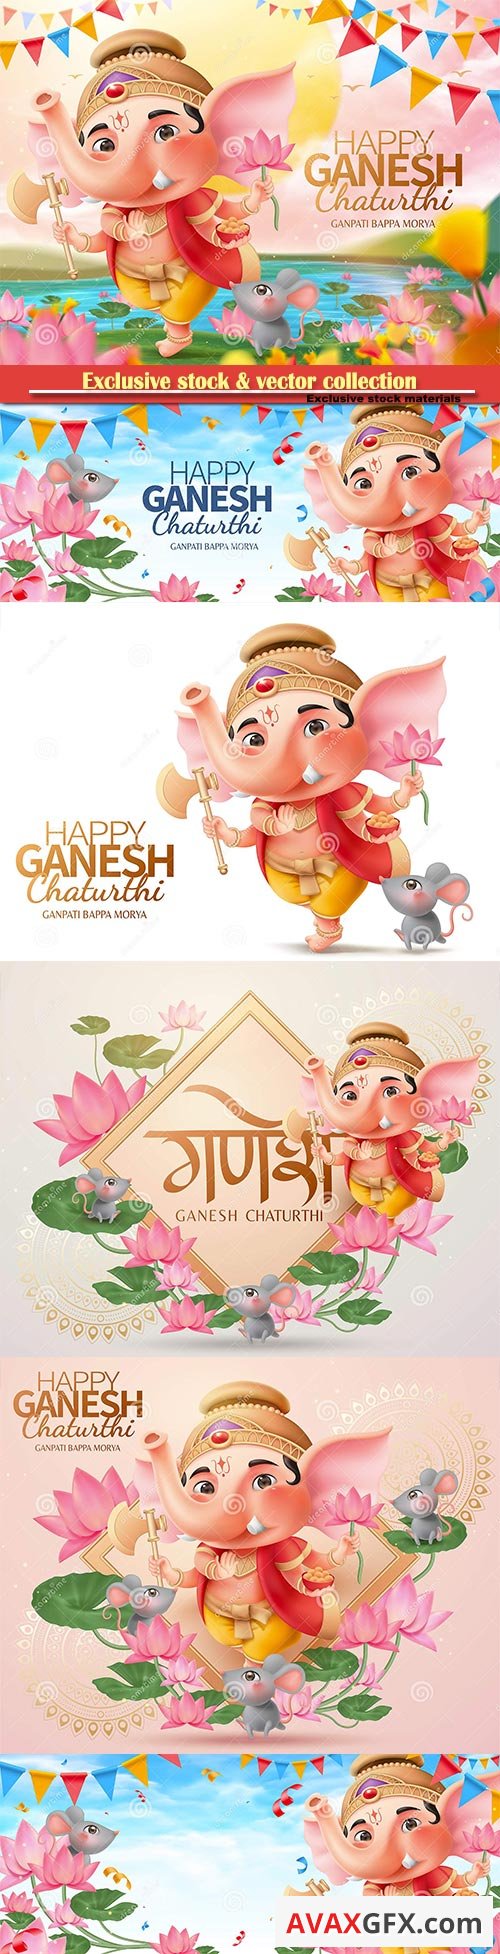 Happy Ganesh chaturthi vector design